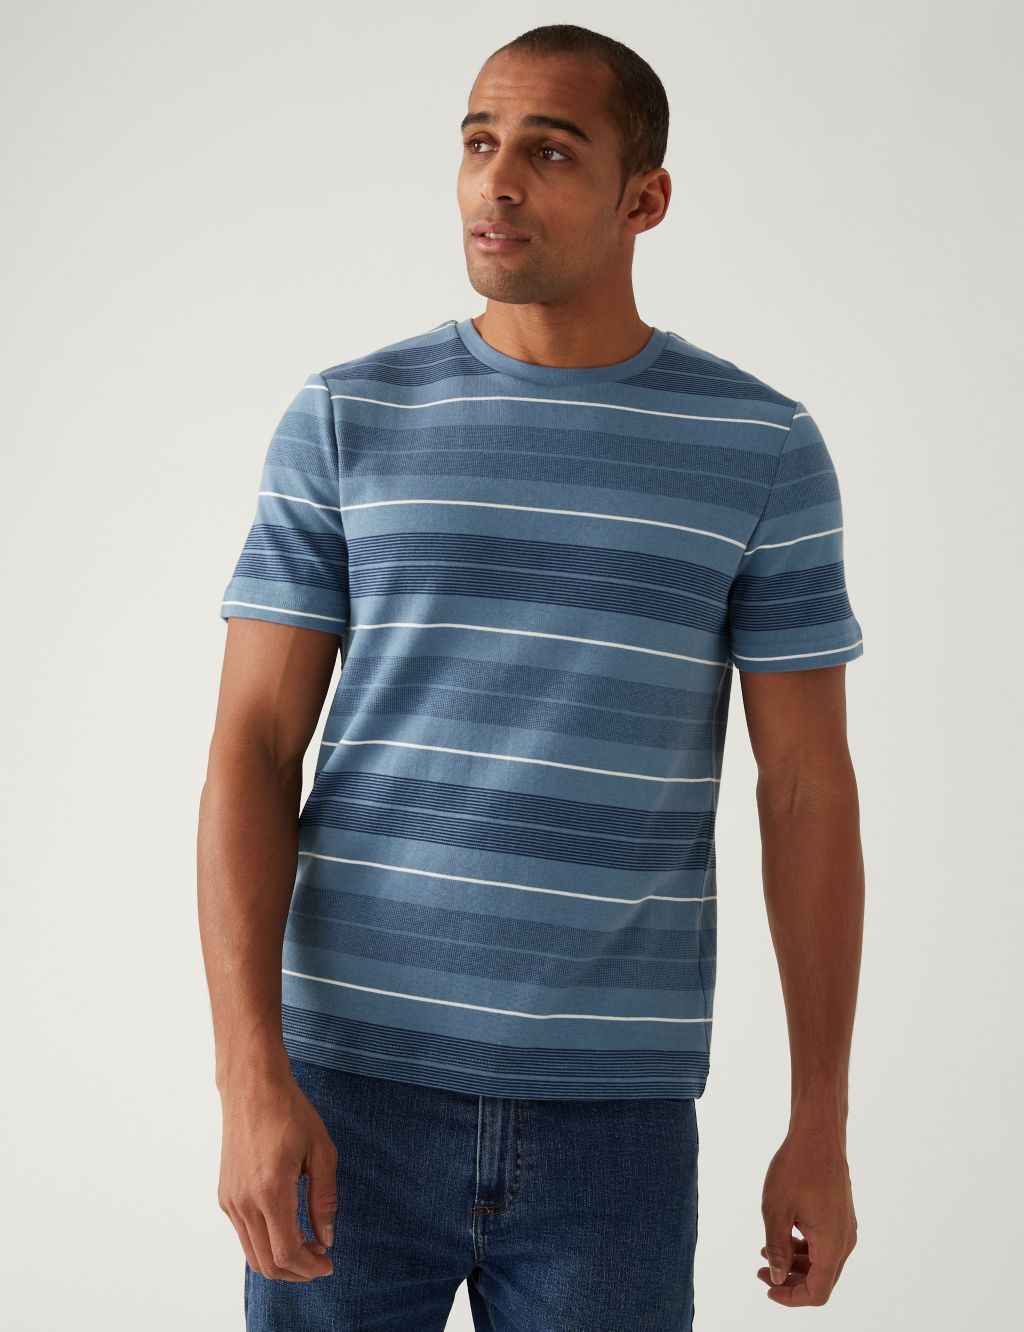 Pure Cotton Double Knit Striped T-Shirt image 1